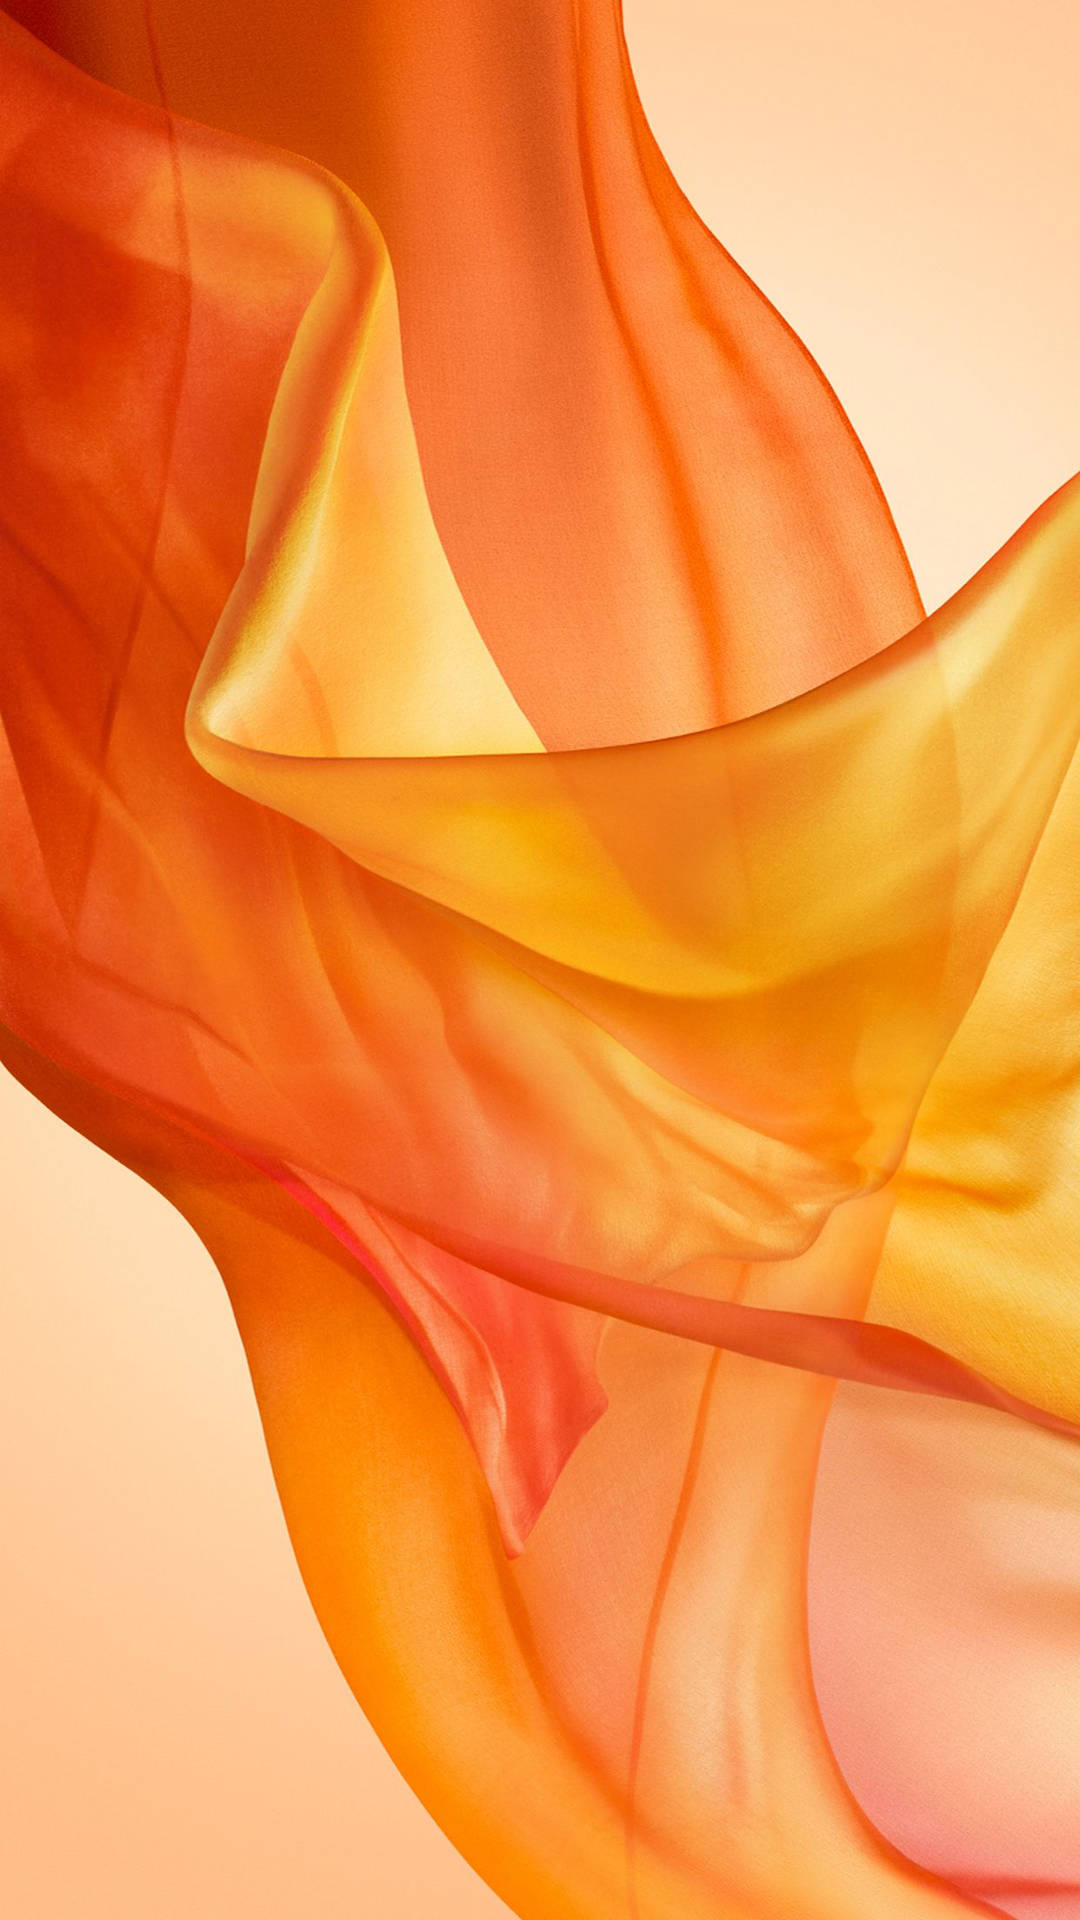 Ipad Pro Orange Cloth Waving Background